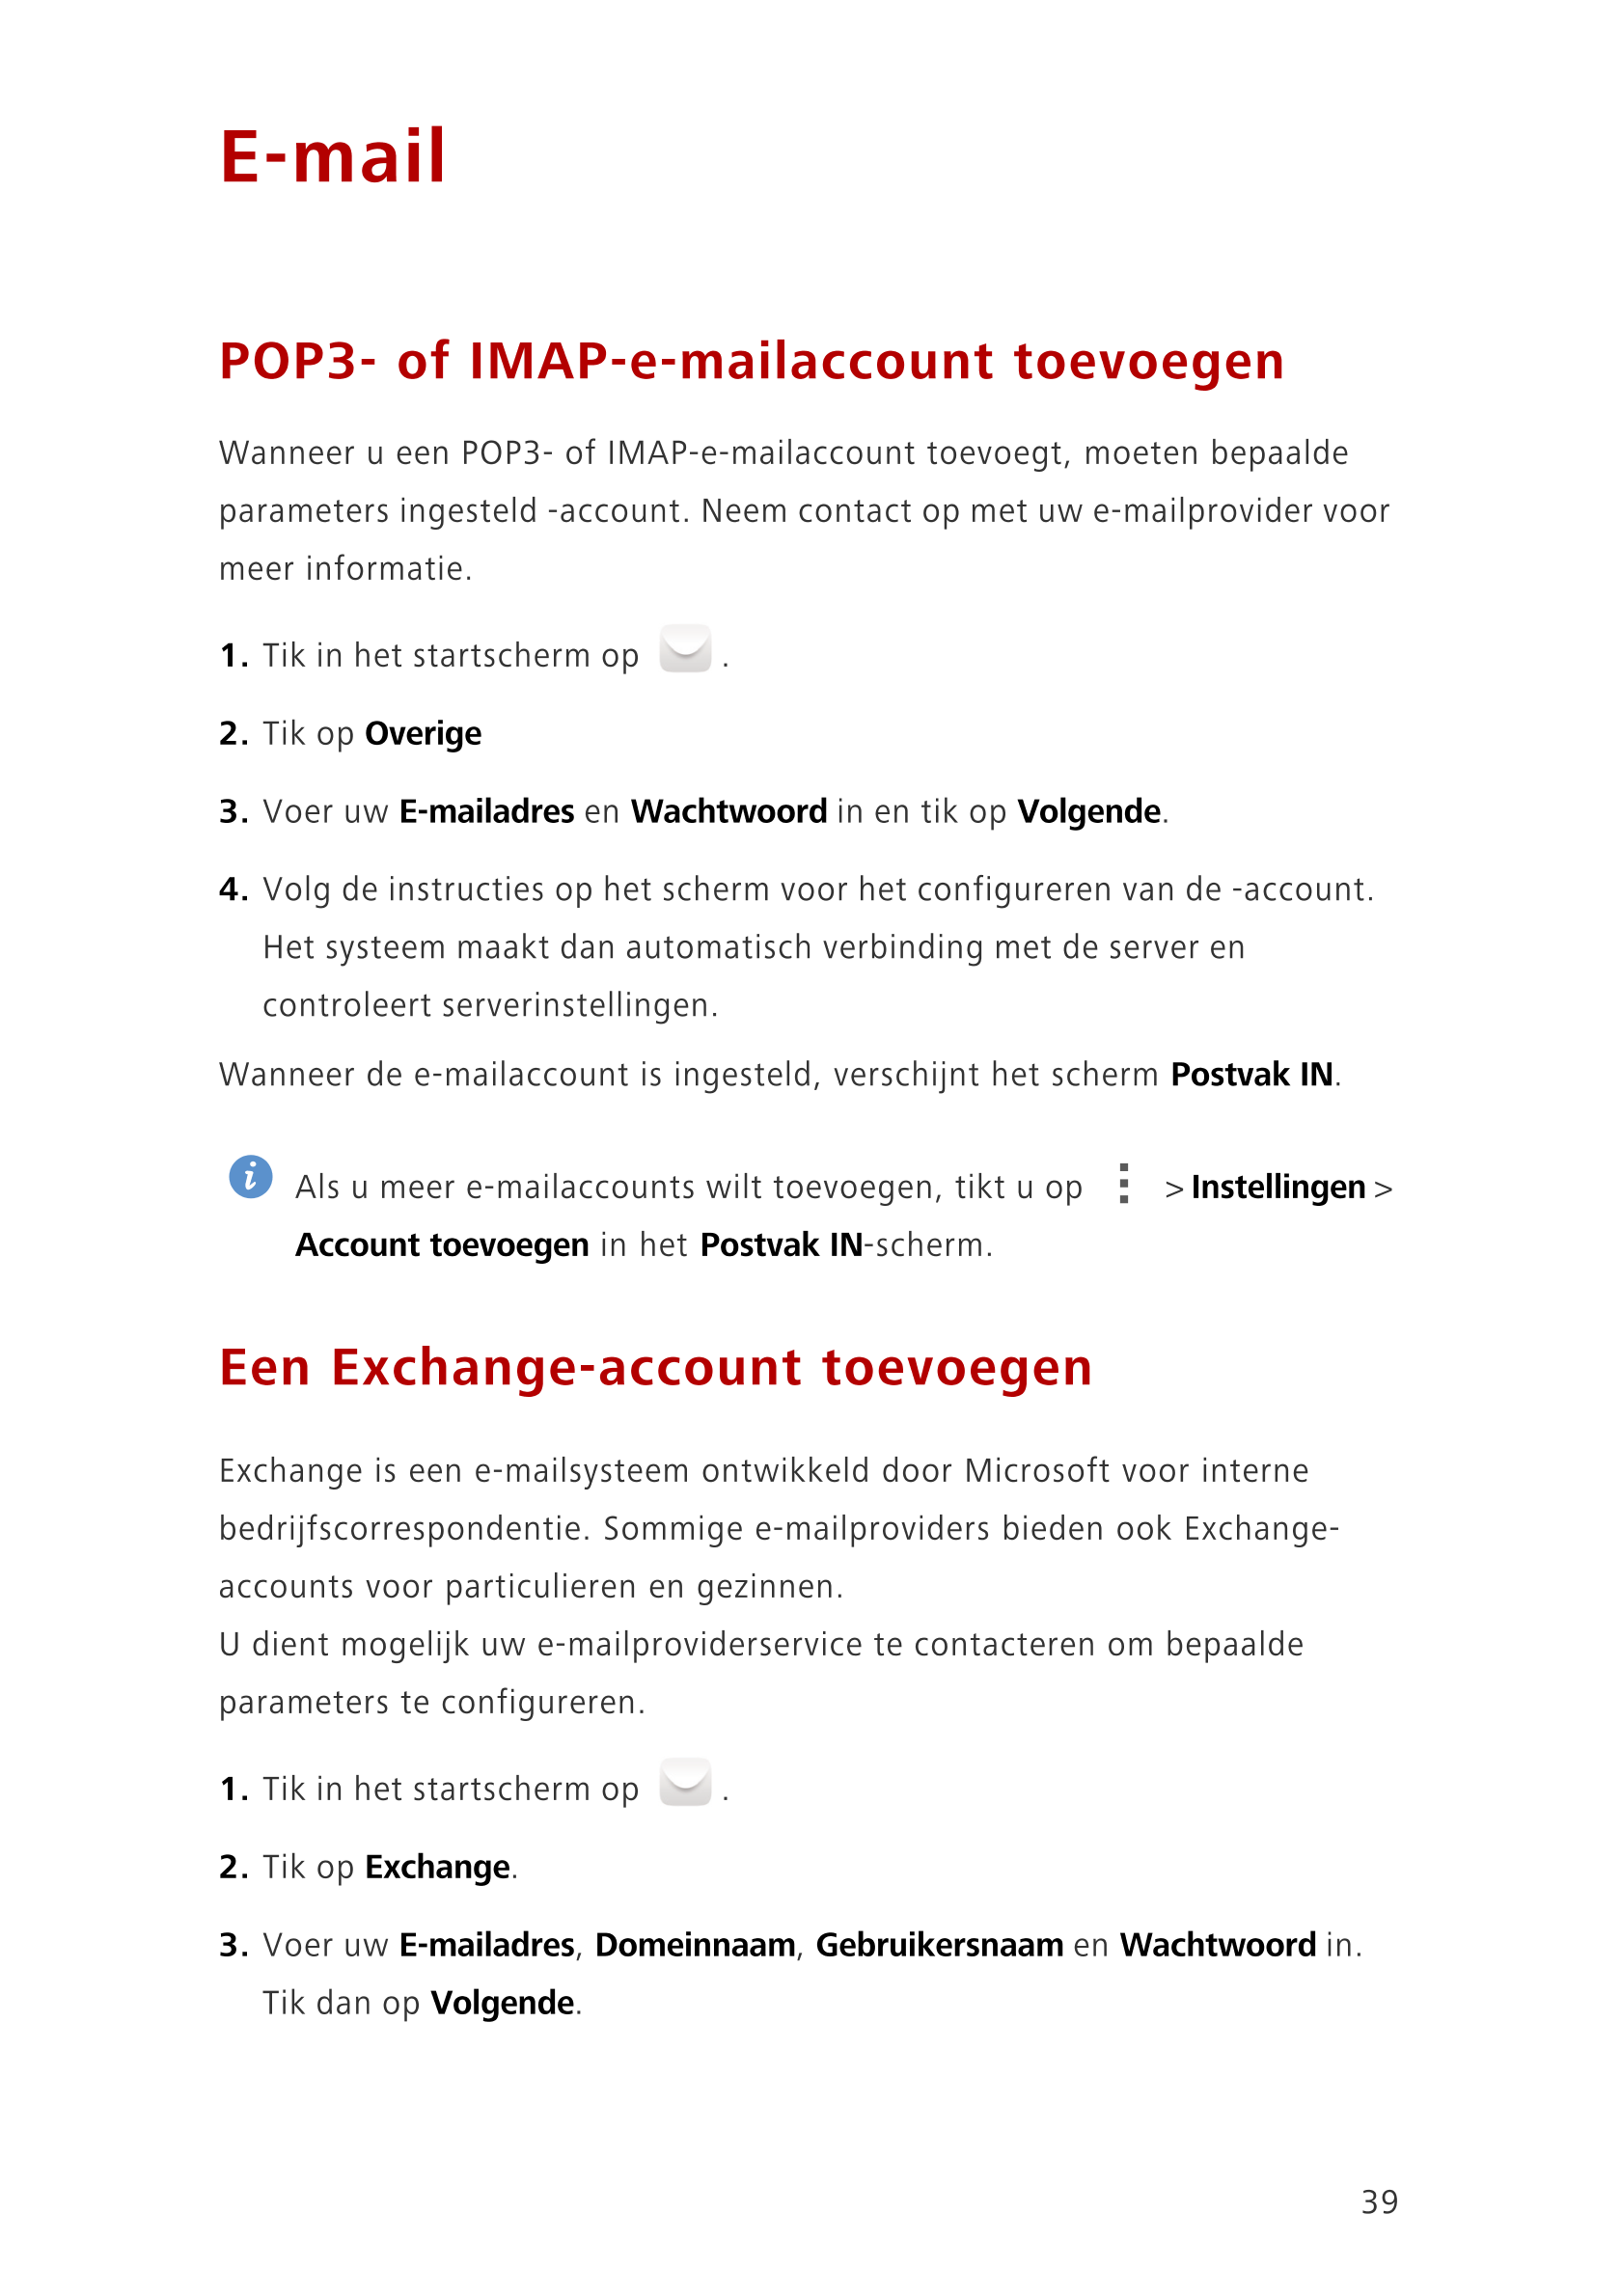 E-mail
POP3- of IMAP-e-mailaccount toevoegen
Wanneer u een POP3- of IMAP-e-mailaccount toevoegt, moeten bepaalde 
parameters ing